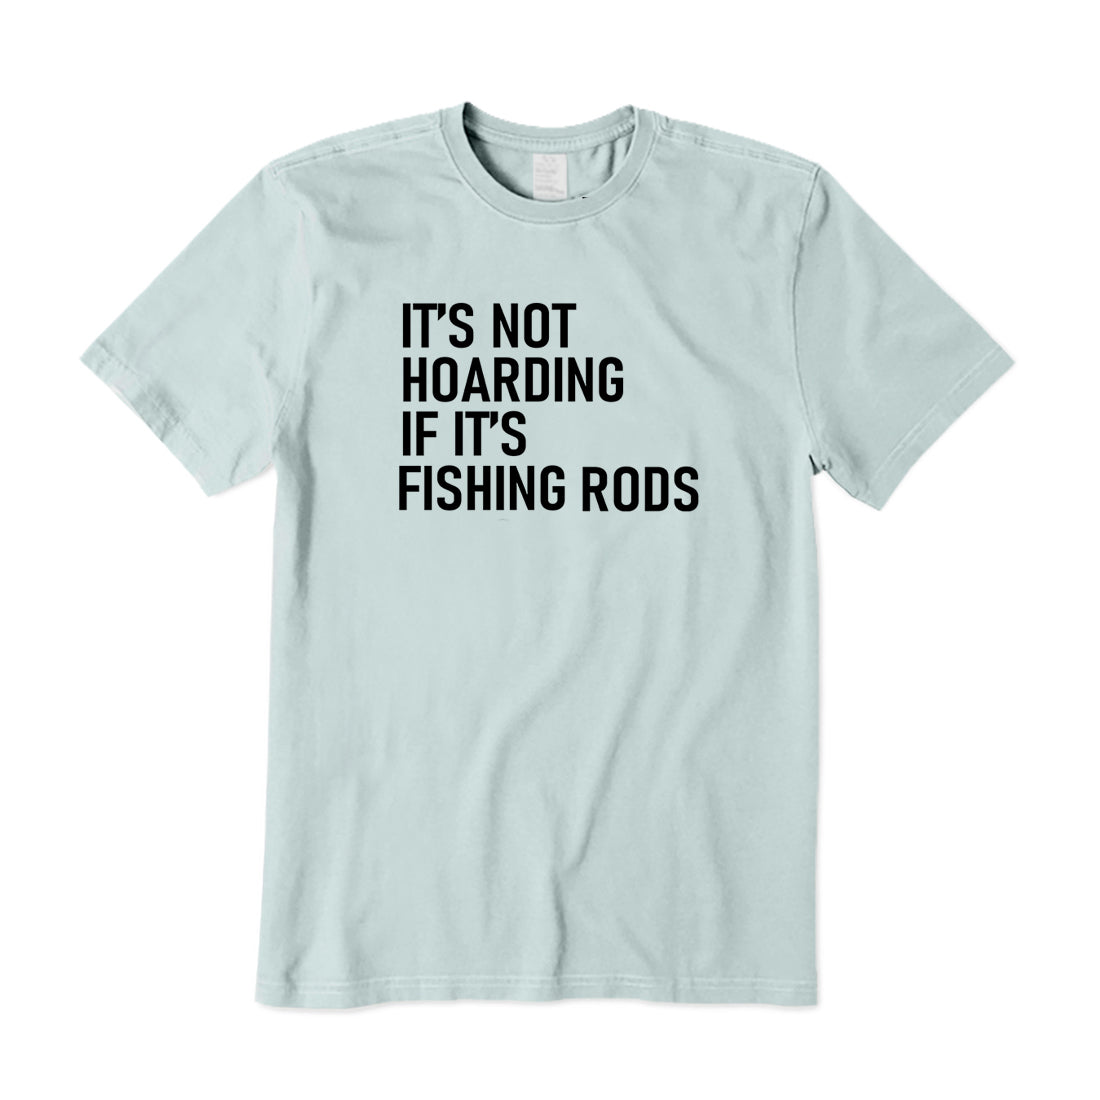 It's Not Hoarding if it's Fishing Rods T-Shirt